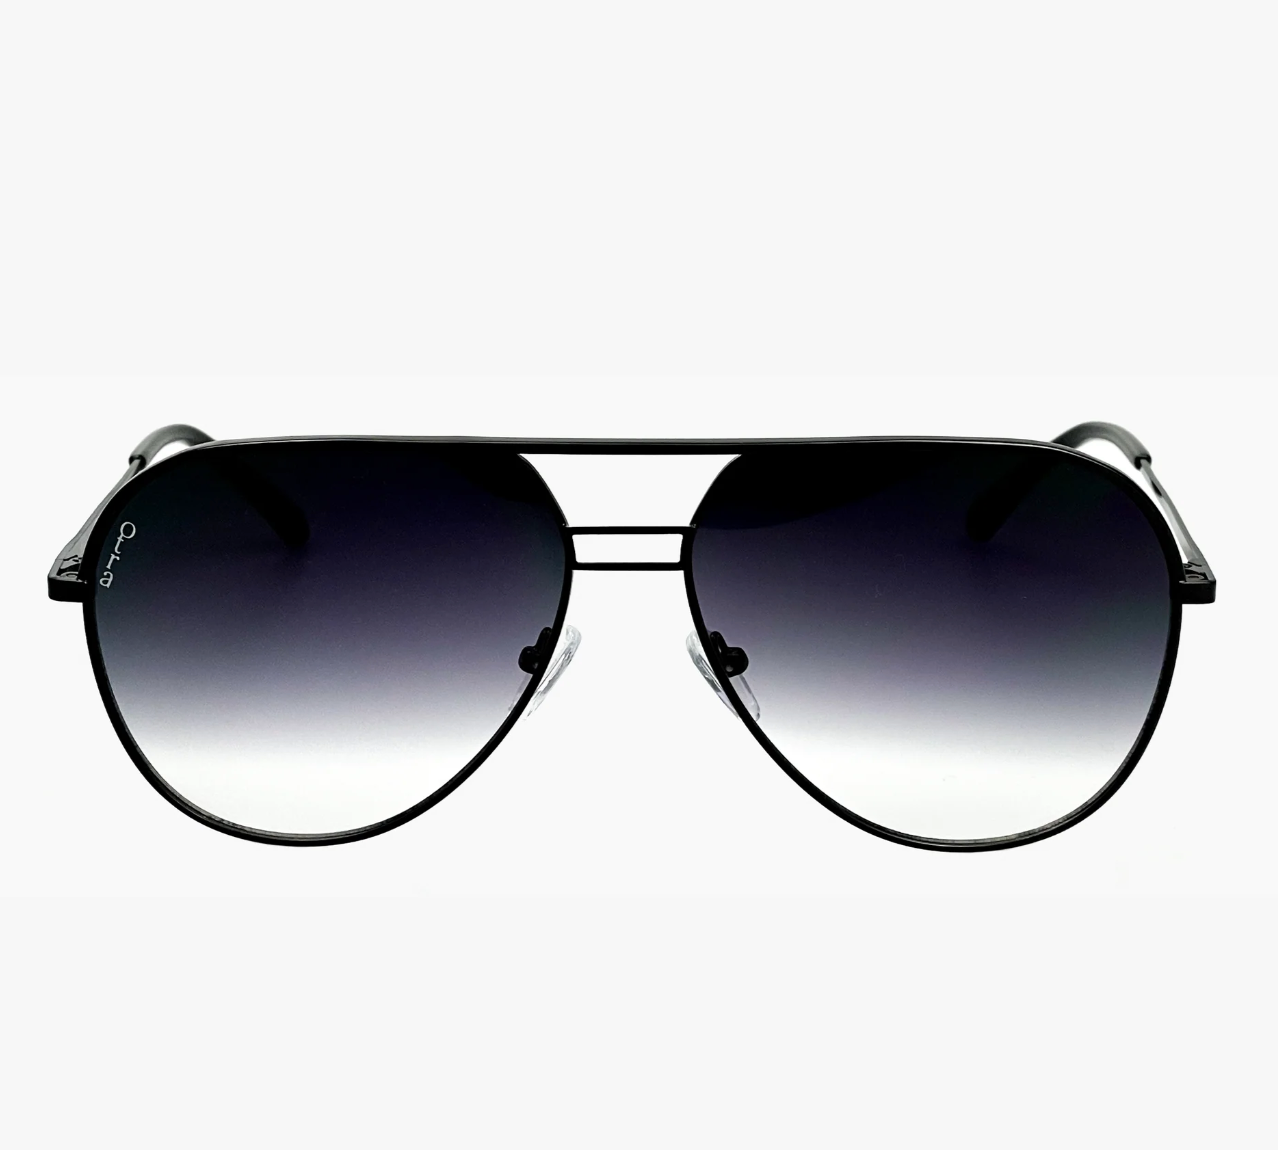 Transit Otra Sunglasses-Small Black